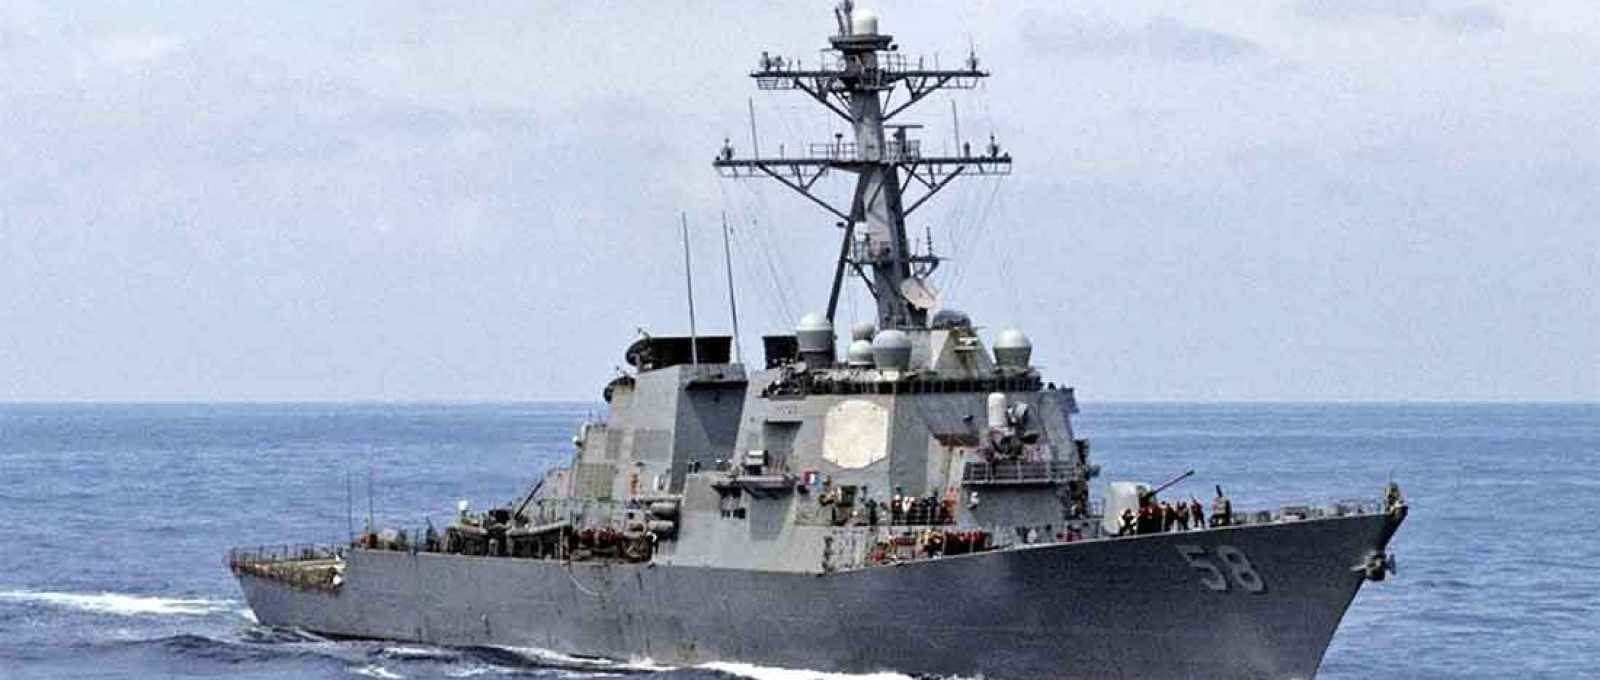 O destroier da marinha americana USS Laboon (Foto: US Navy).